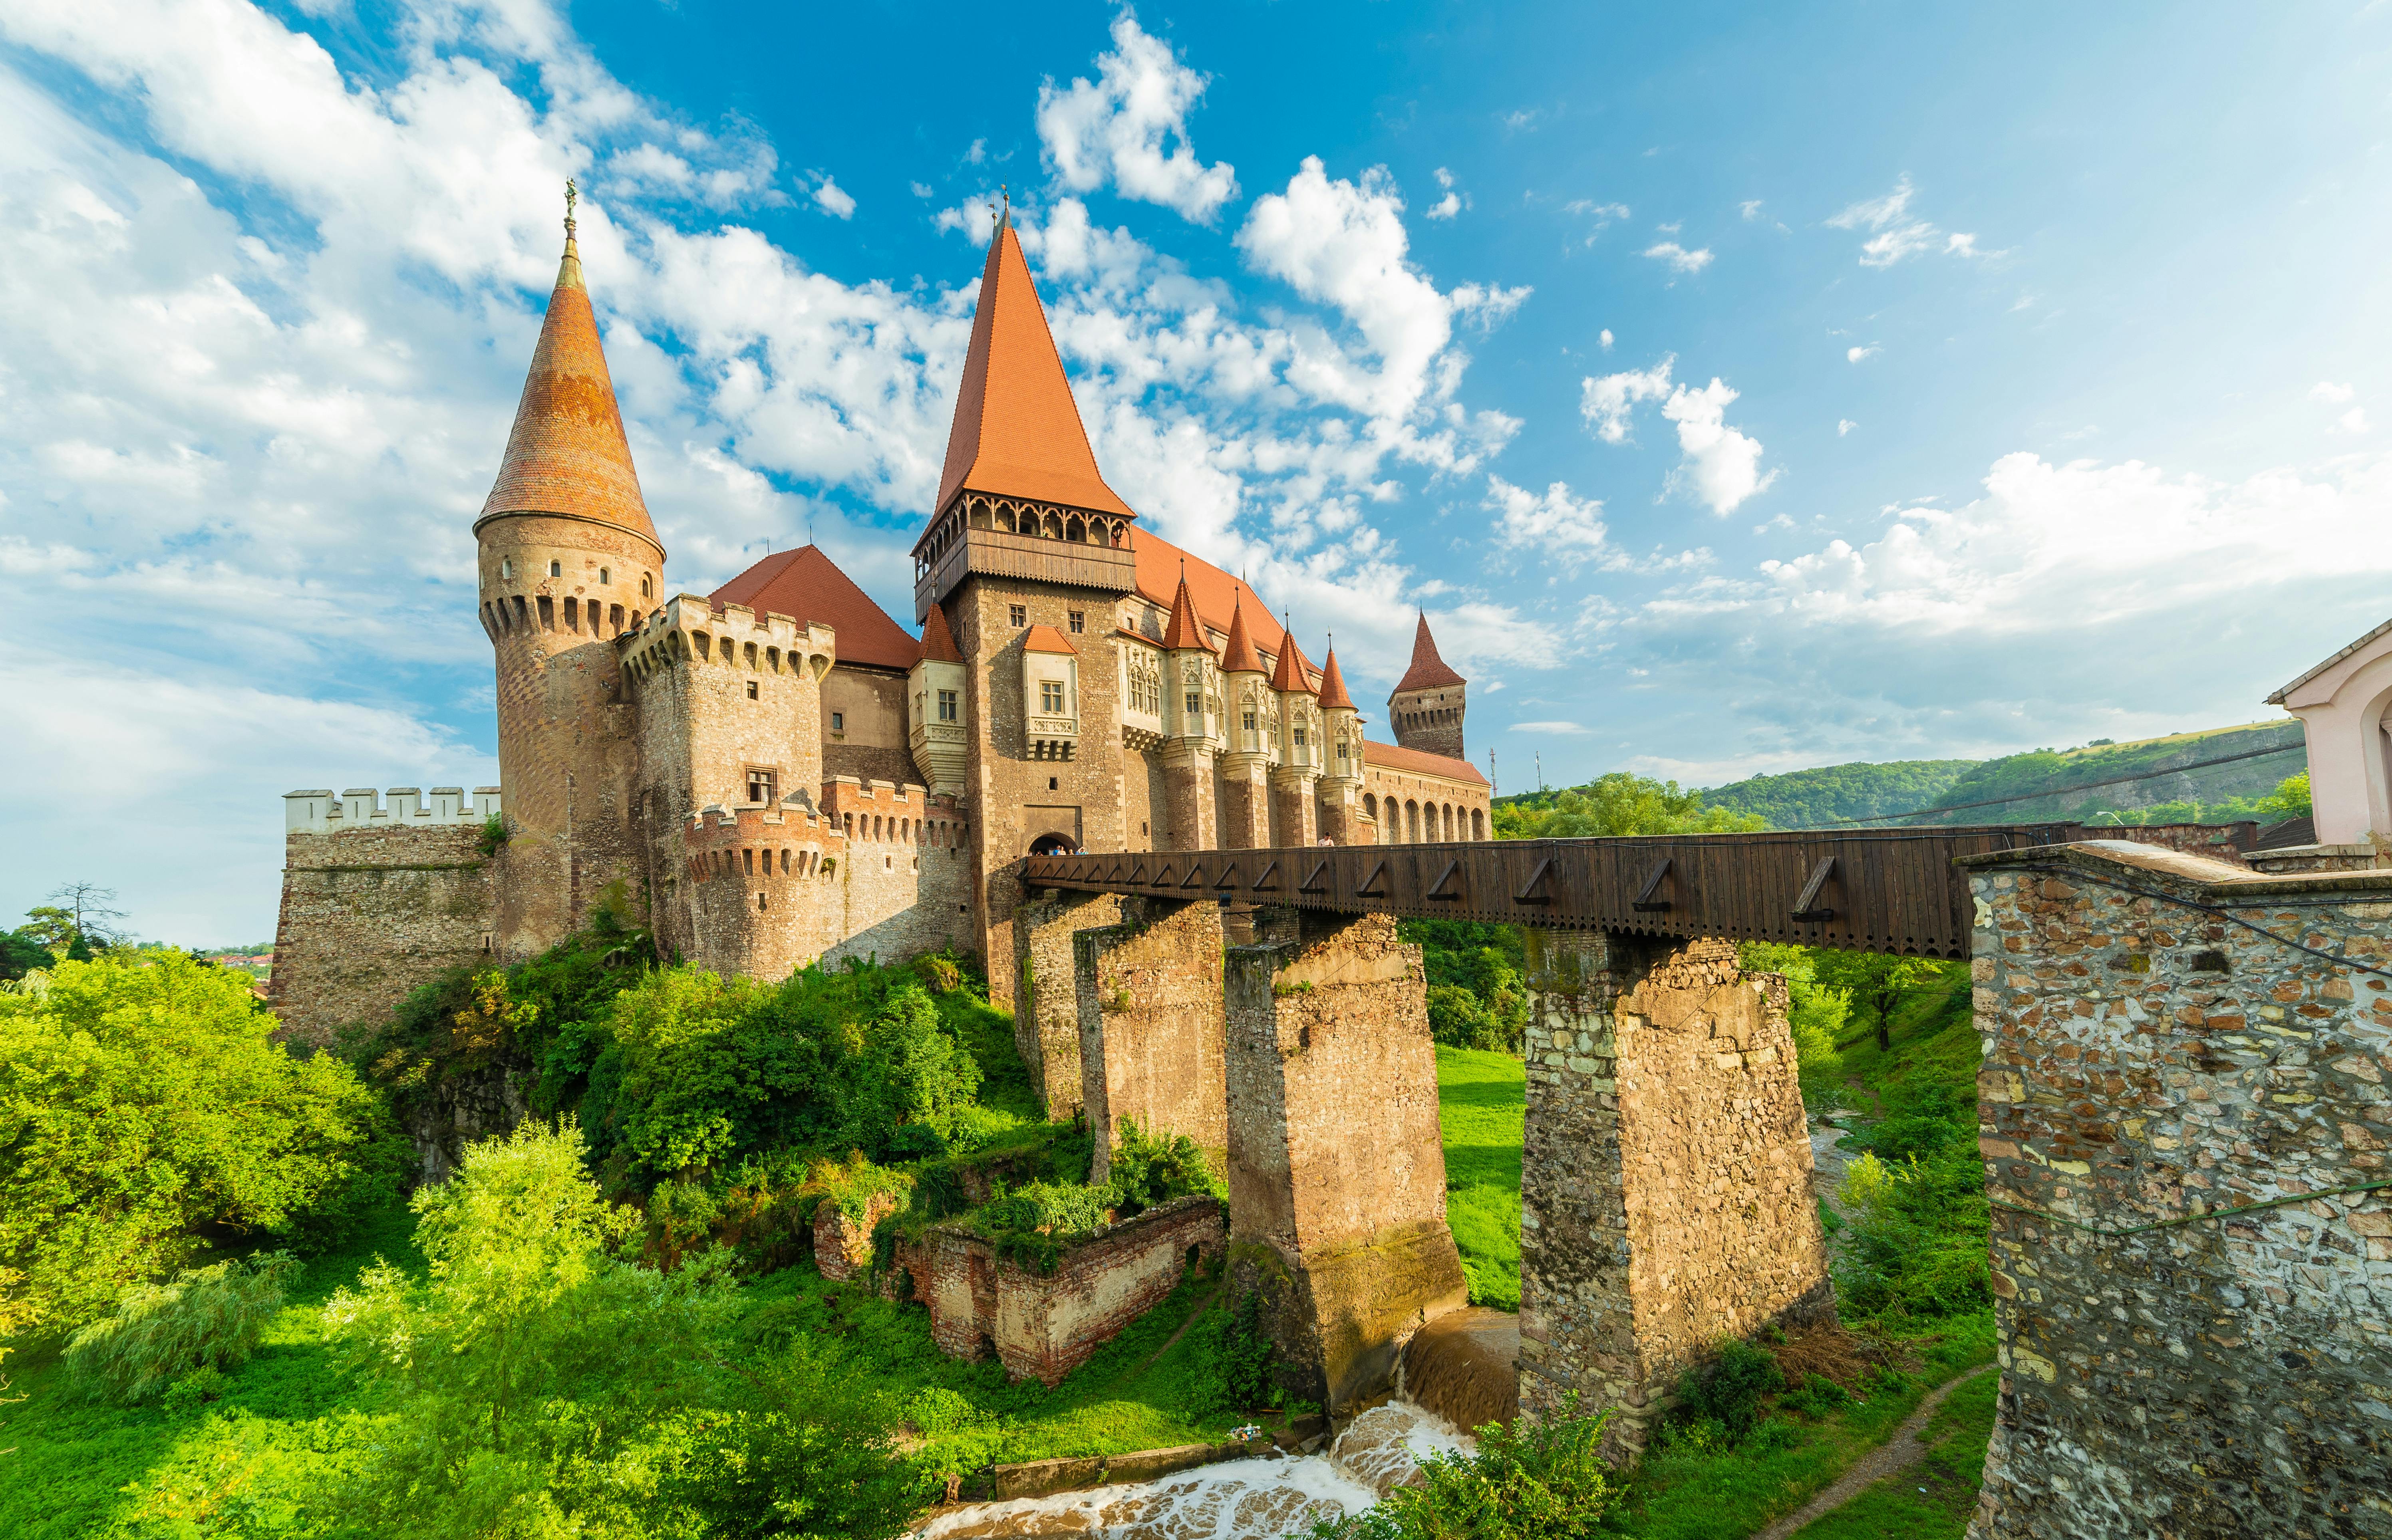 Tour to Corvin Castle in Hunedoara and Alba Iulia